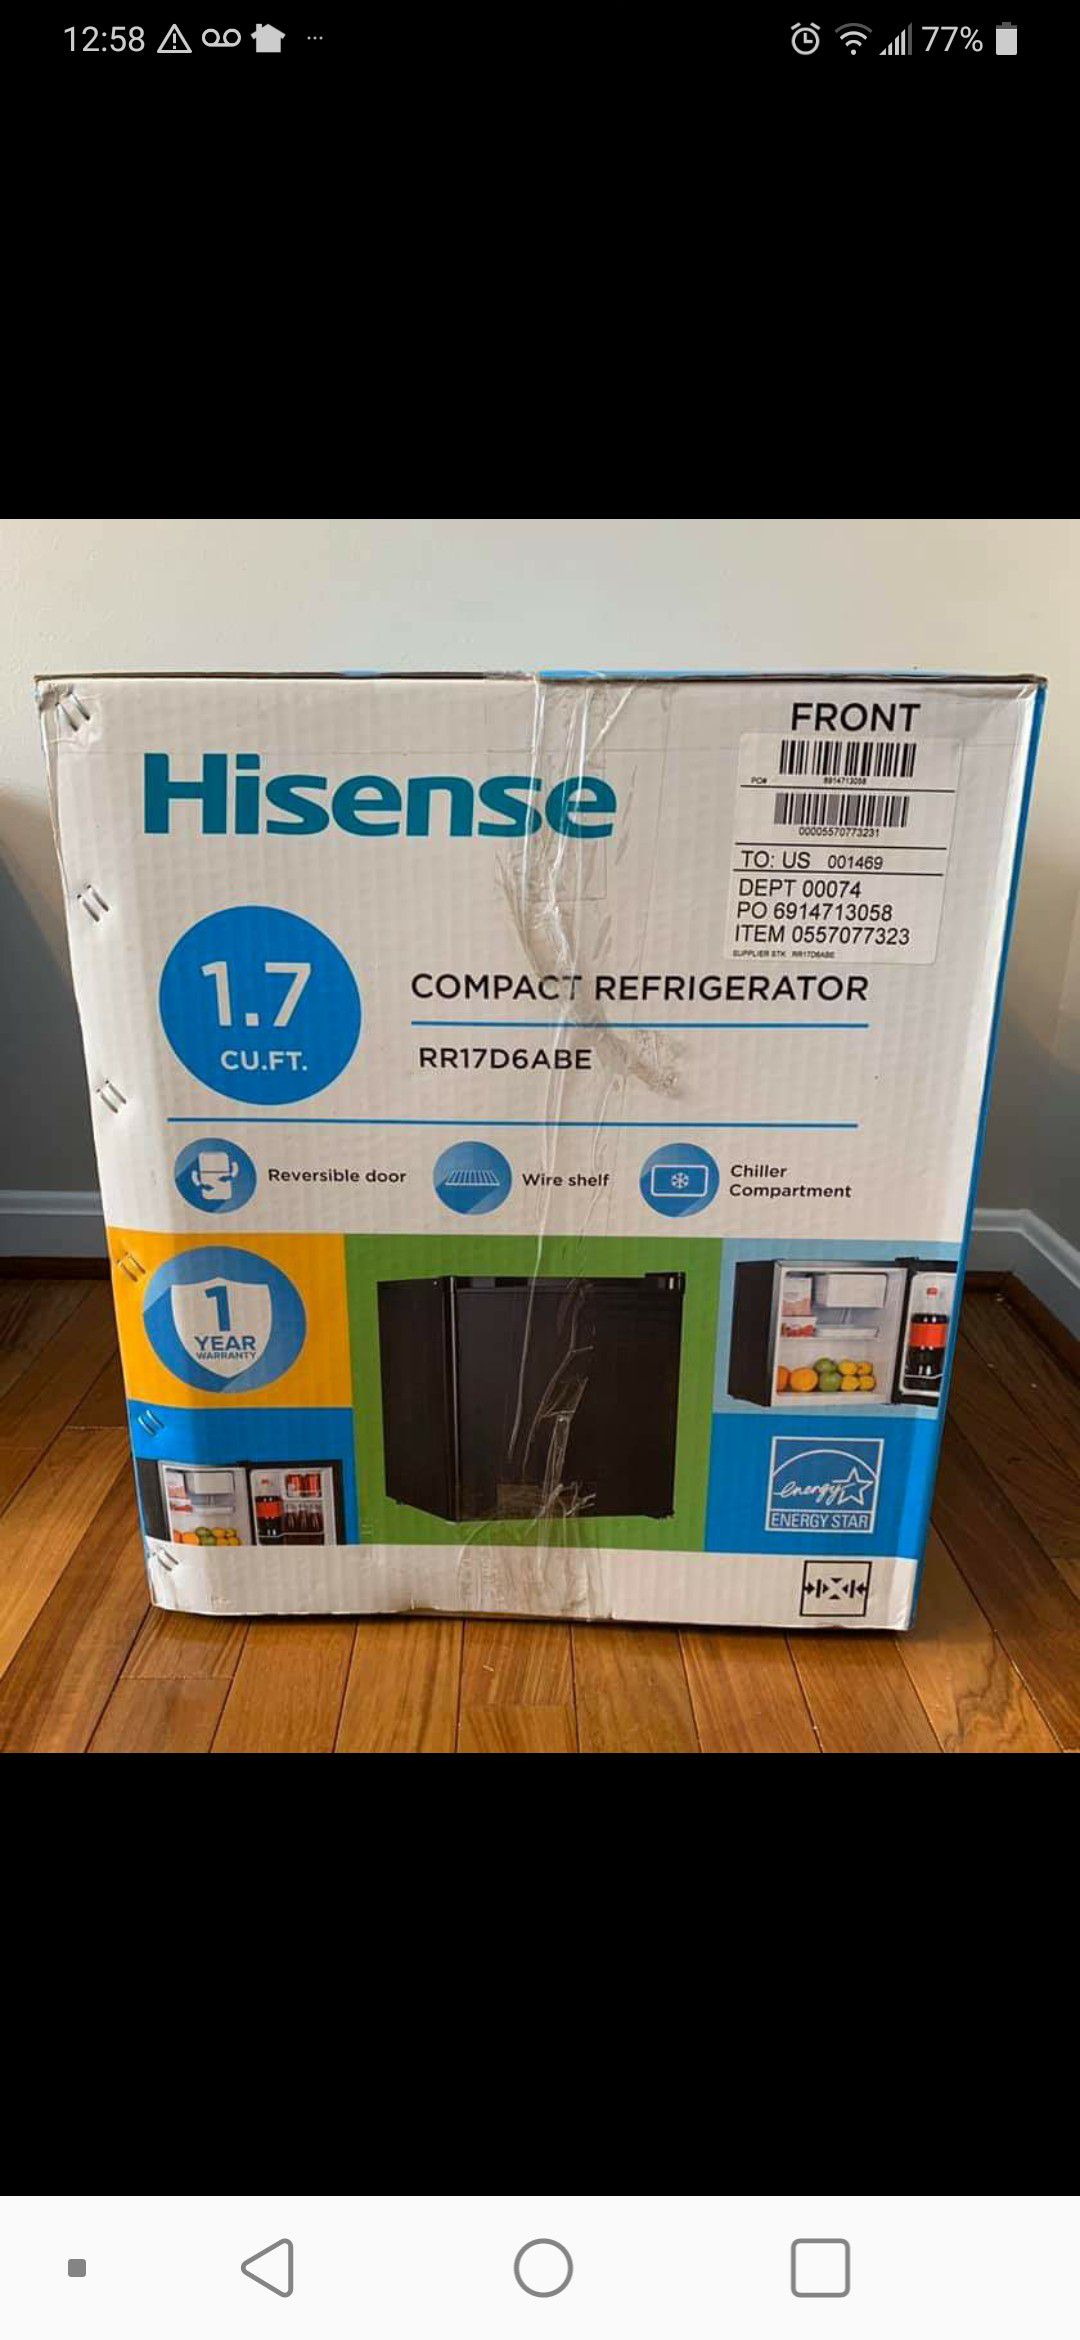 Hisense 1.7 cu ft compact refrigerator